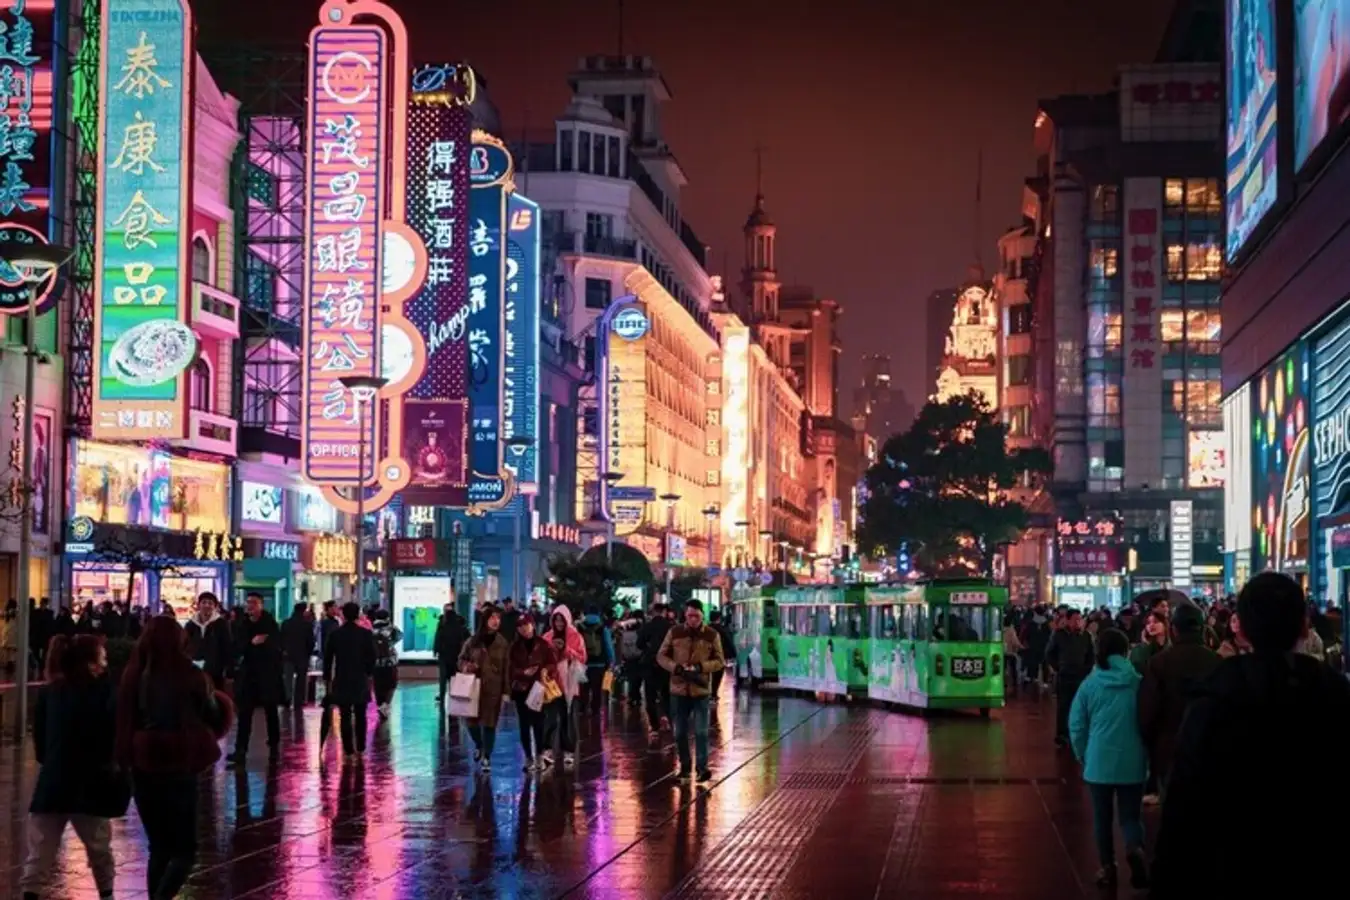 shanghai tourist bus routes